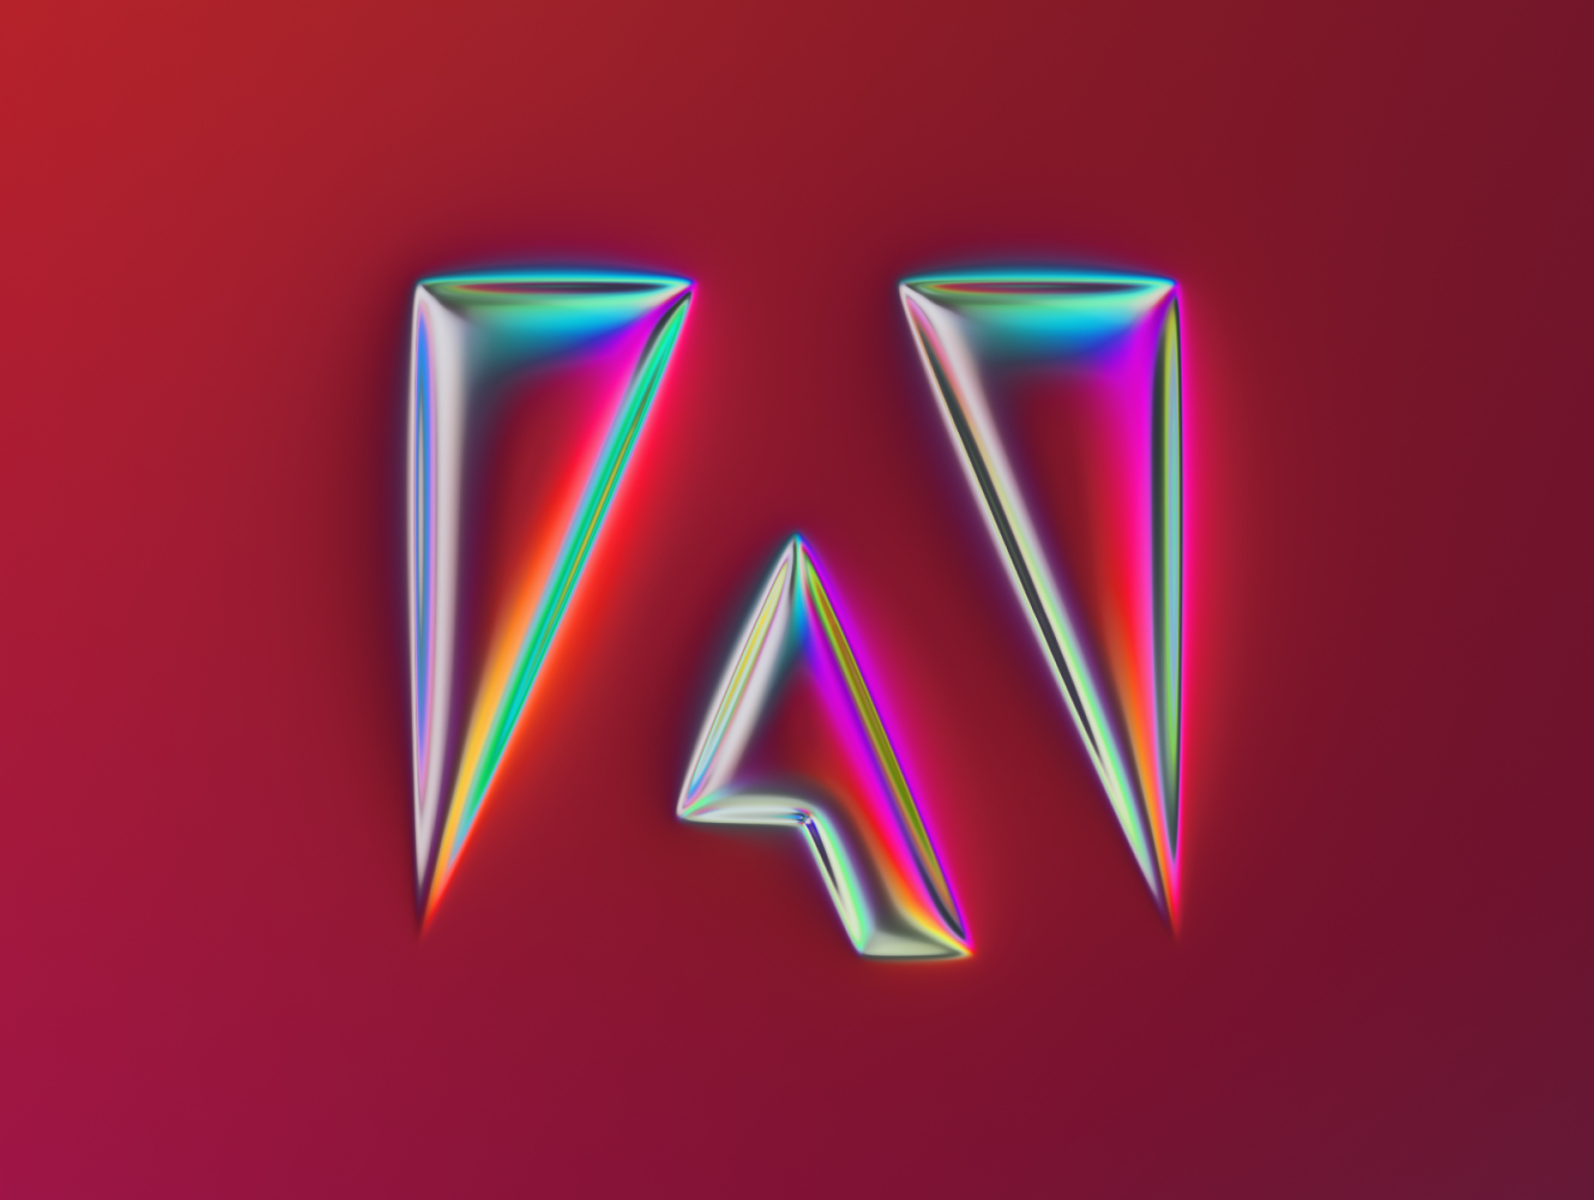 36 logos - Adobe by Martin Naumann on Dribbble